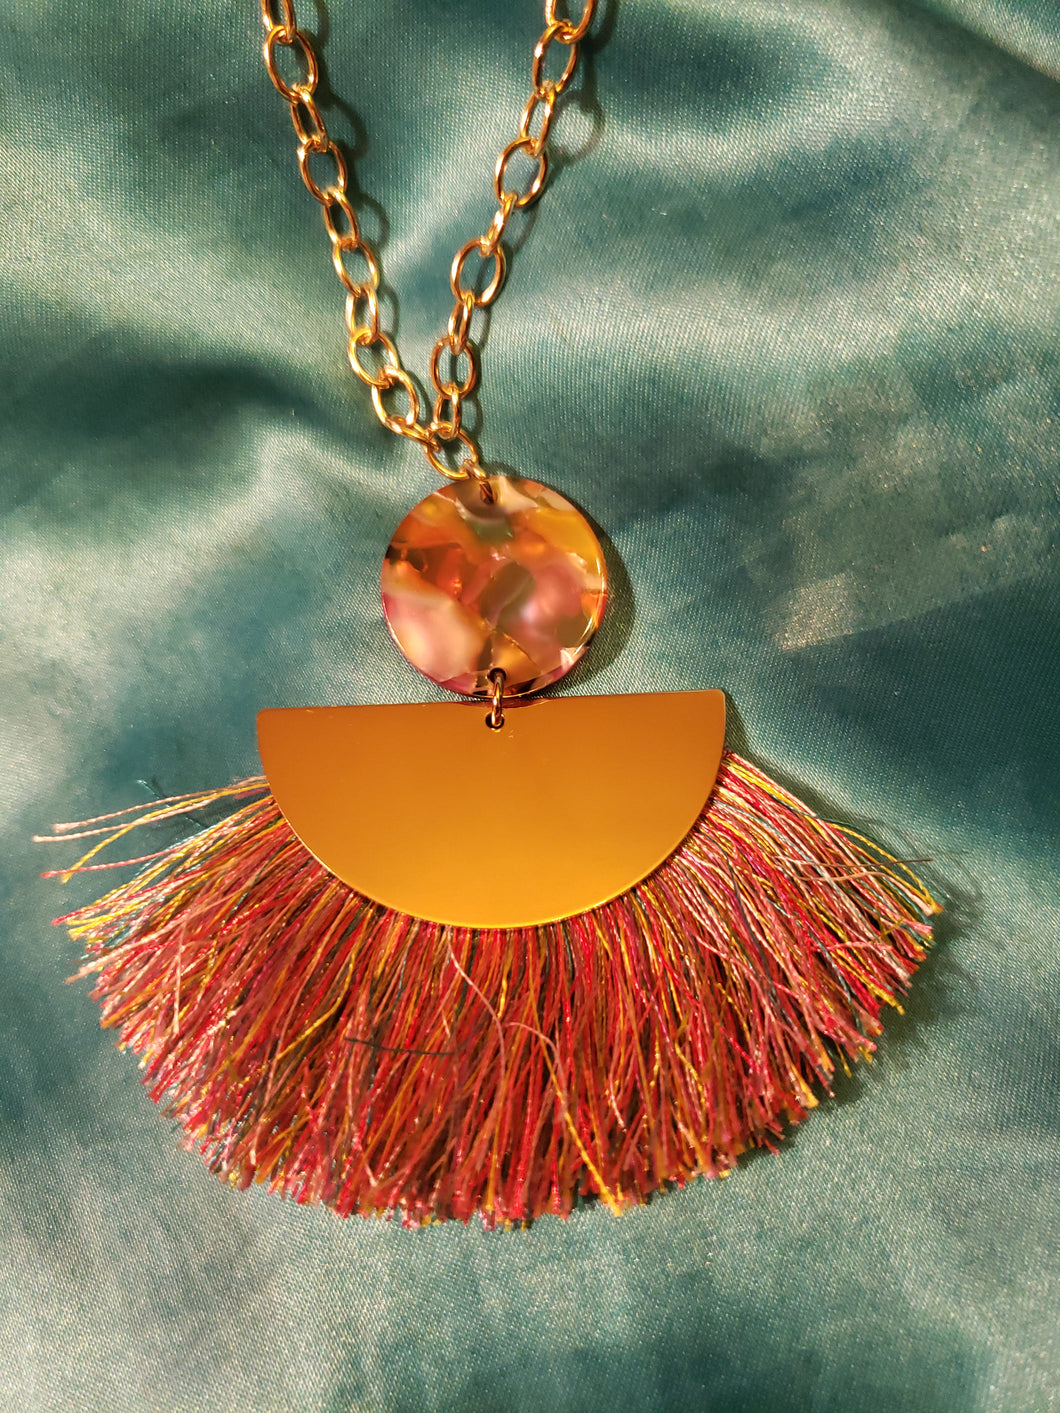 Half circle with fringe pendant necklace